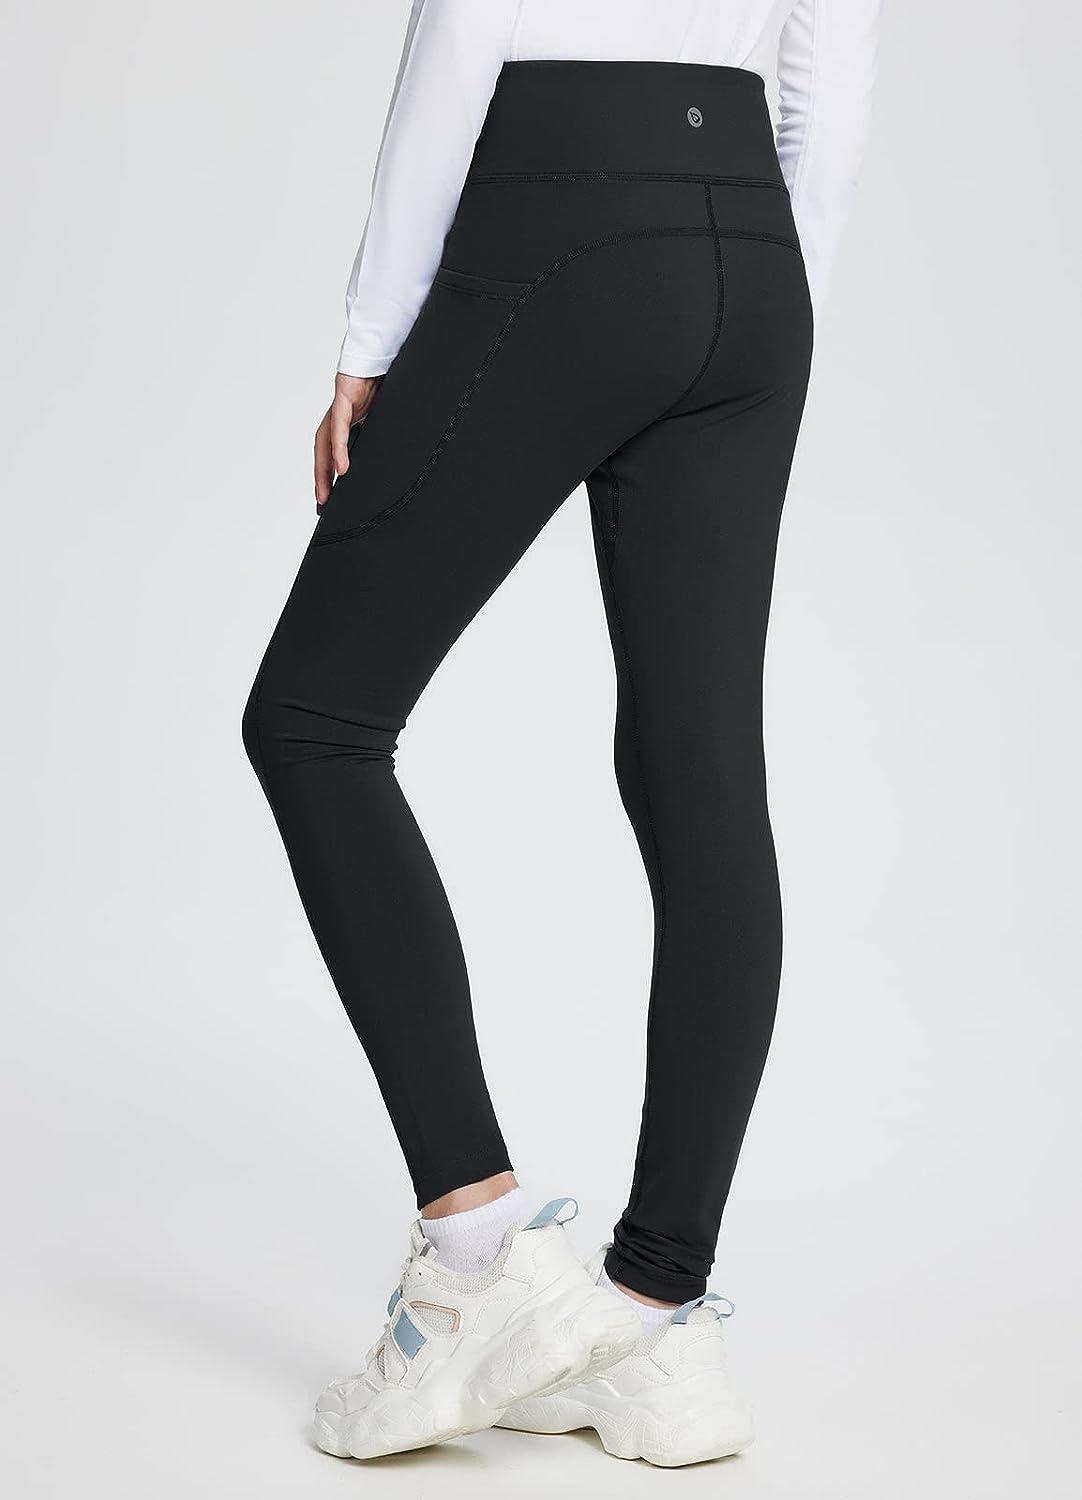 BALEAF Girls' Fleece Lined Leggings Kids Warm Pants Youth Compression Yoga  Athletic School Pants with Pockets Black Medium